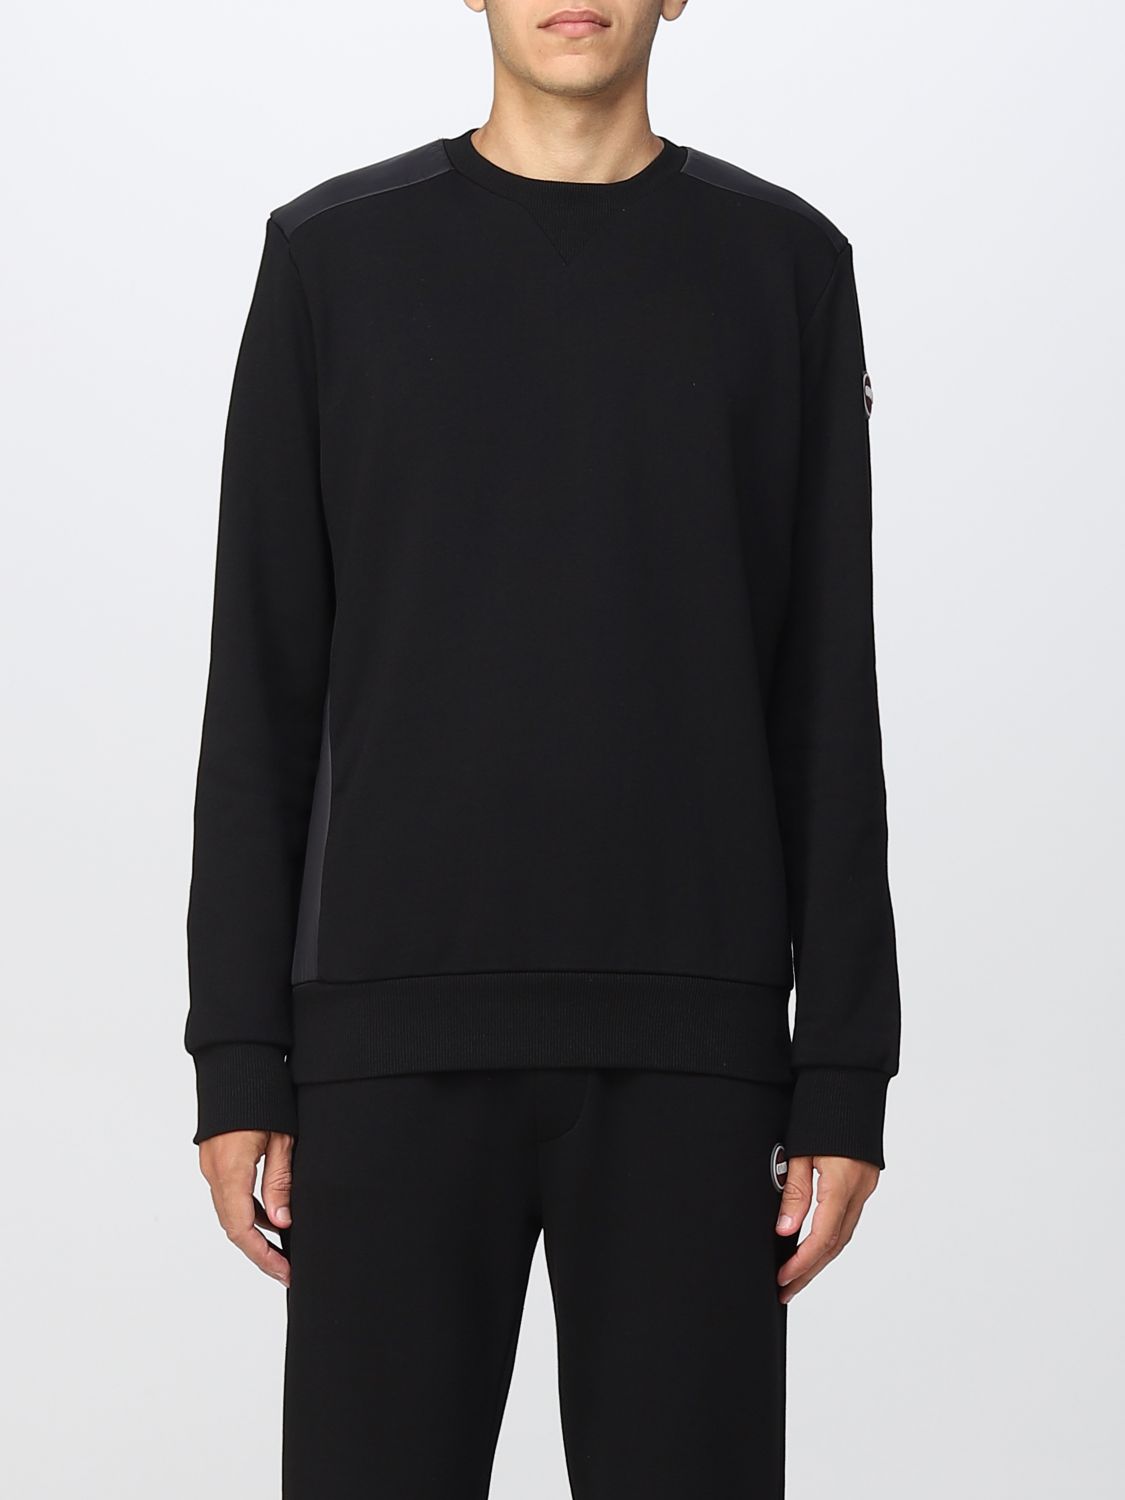 COLMAR: sweatshirt for man - Black | Colmar sweatshirt 82899UX online ...